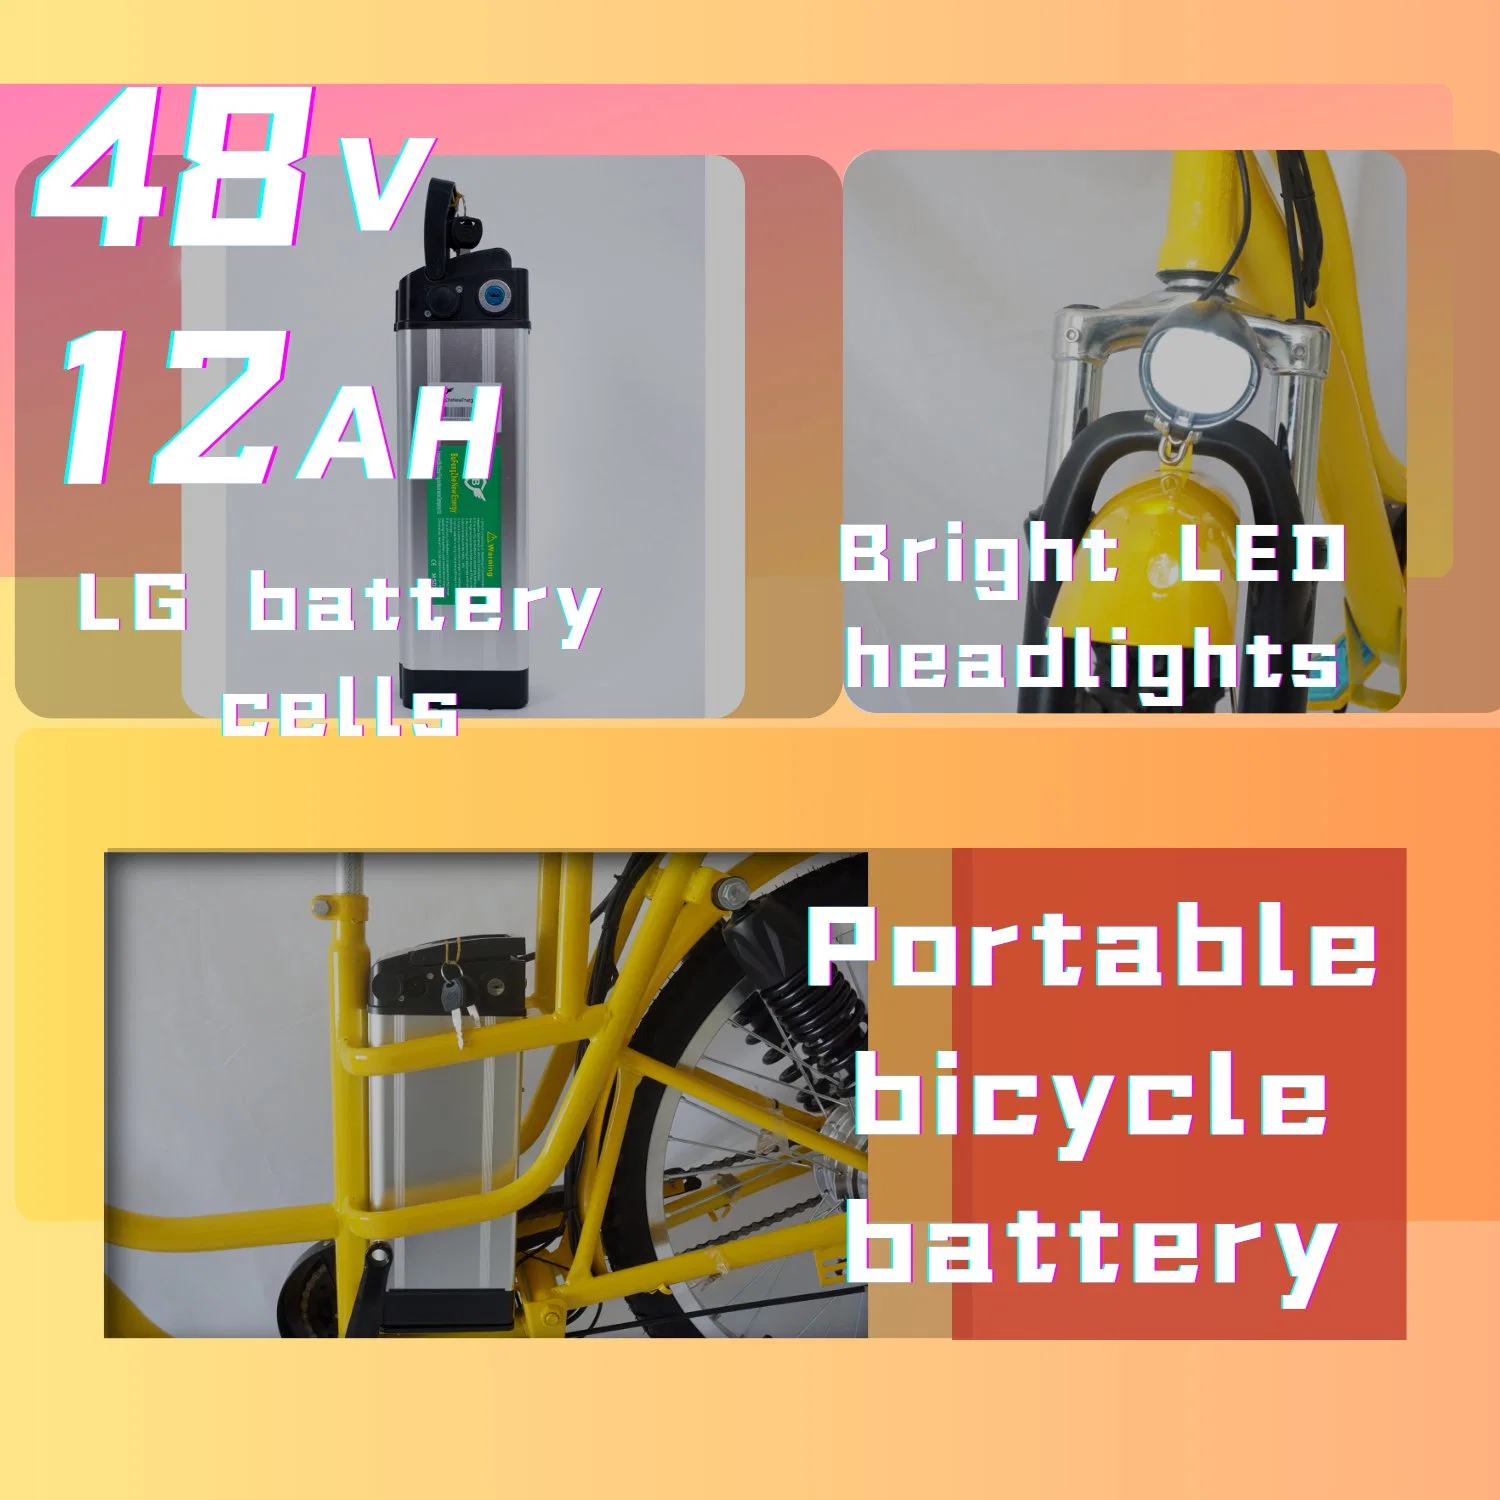 Aluminium-Legierung Rack Electric City Fahrrad Transport Lieferant 48V350W15ah50km Ausdauer